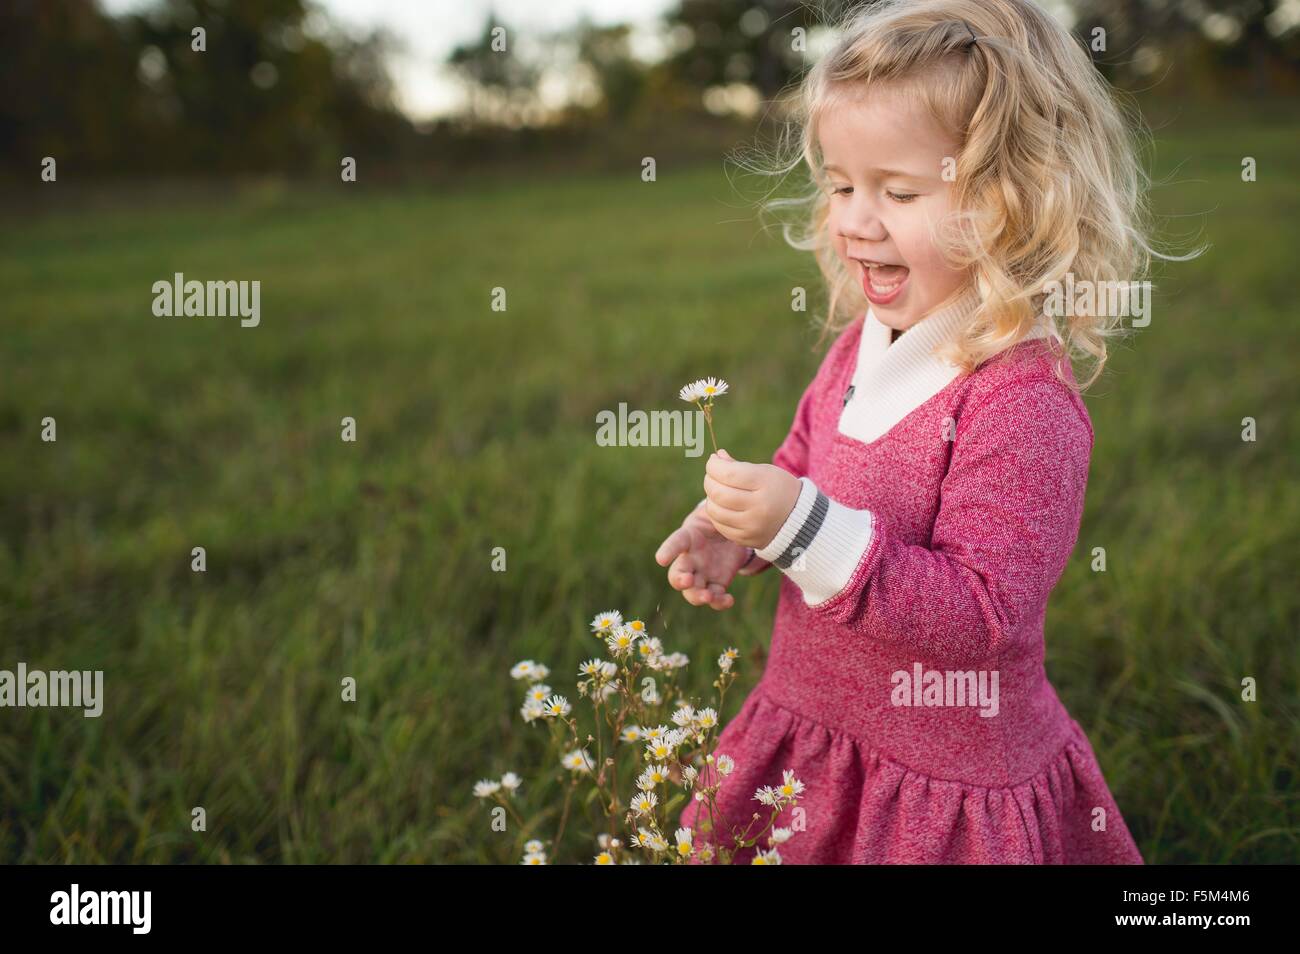 Girl wearing pink dress picking wildflowers in field Stock Photo